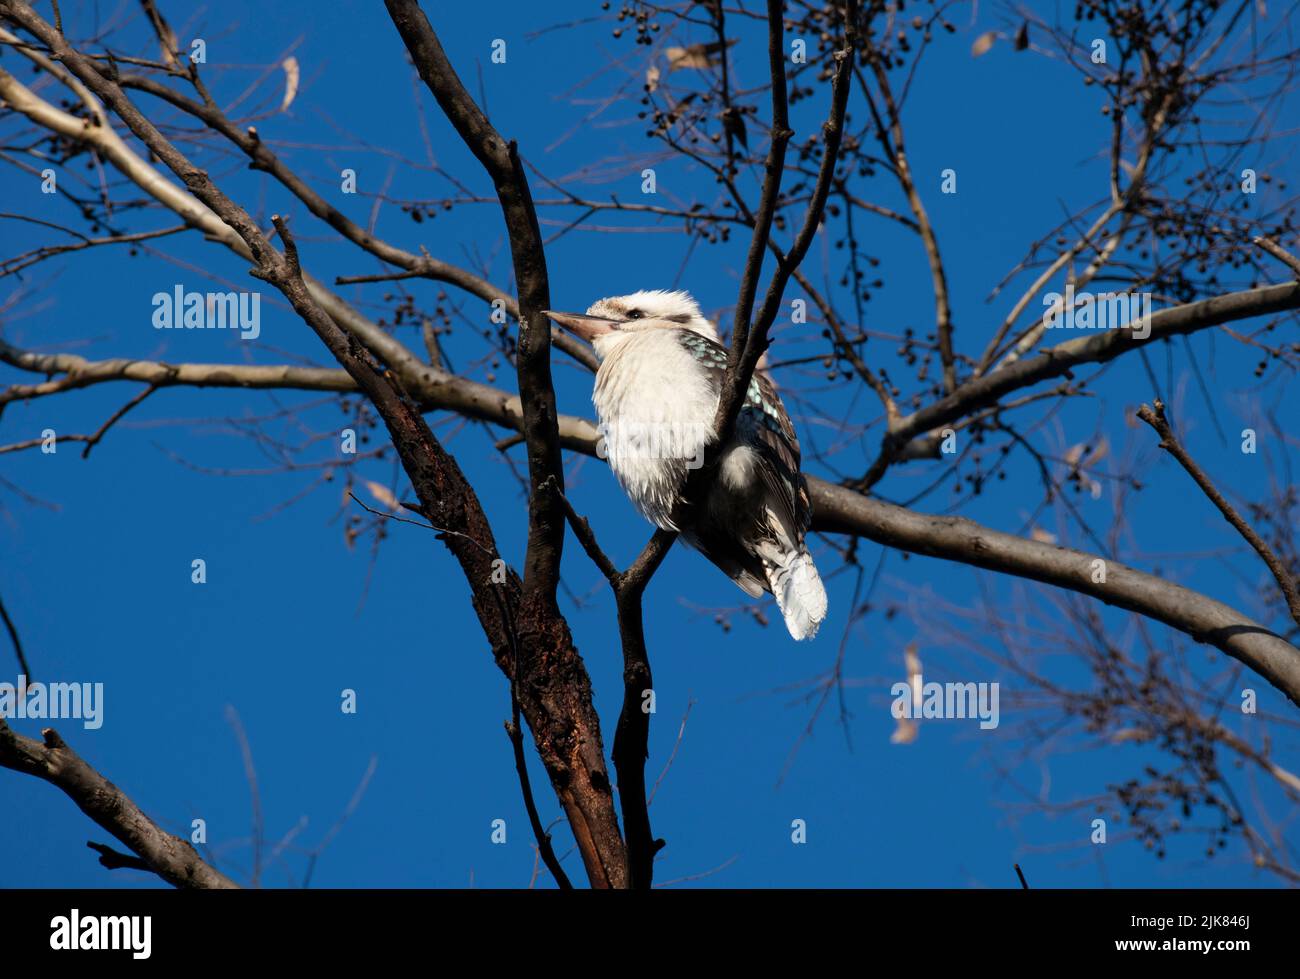 Kookaburra flying hi-res stock photography and images - Alamy